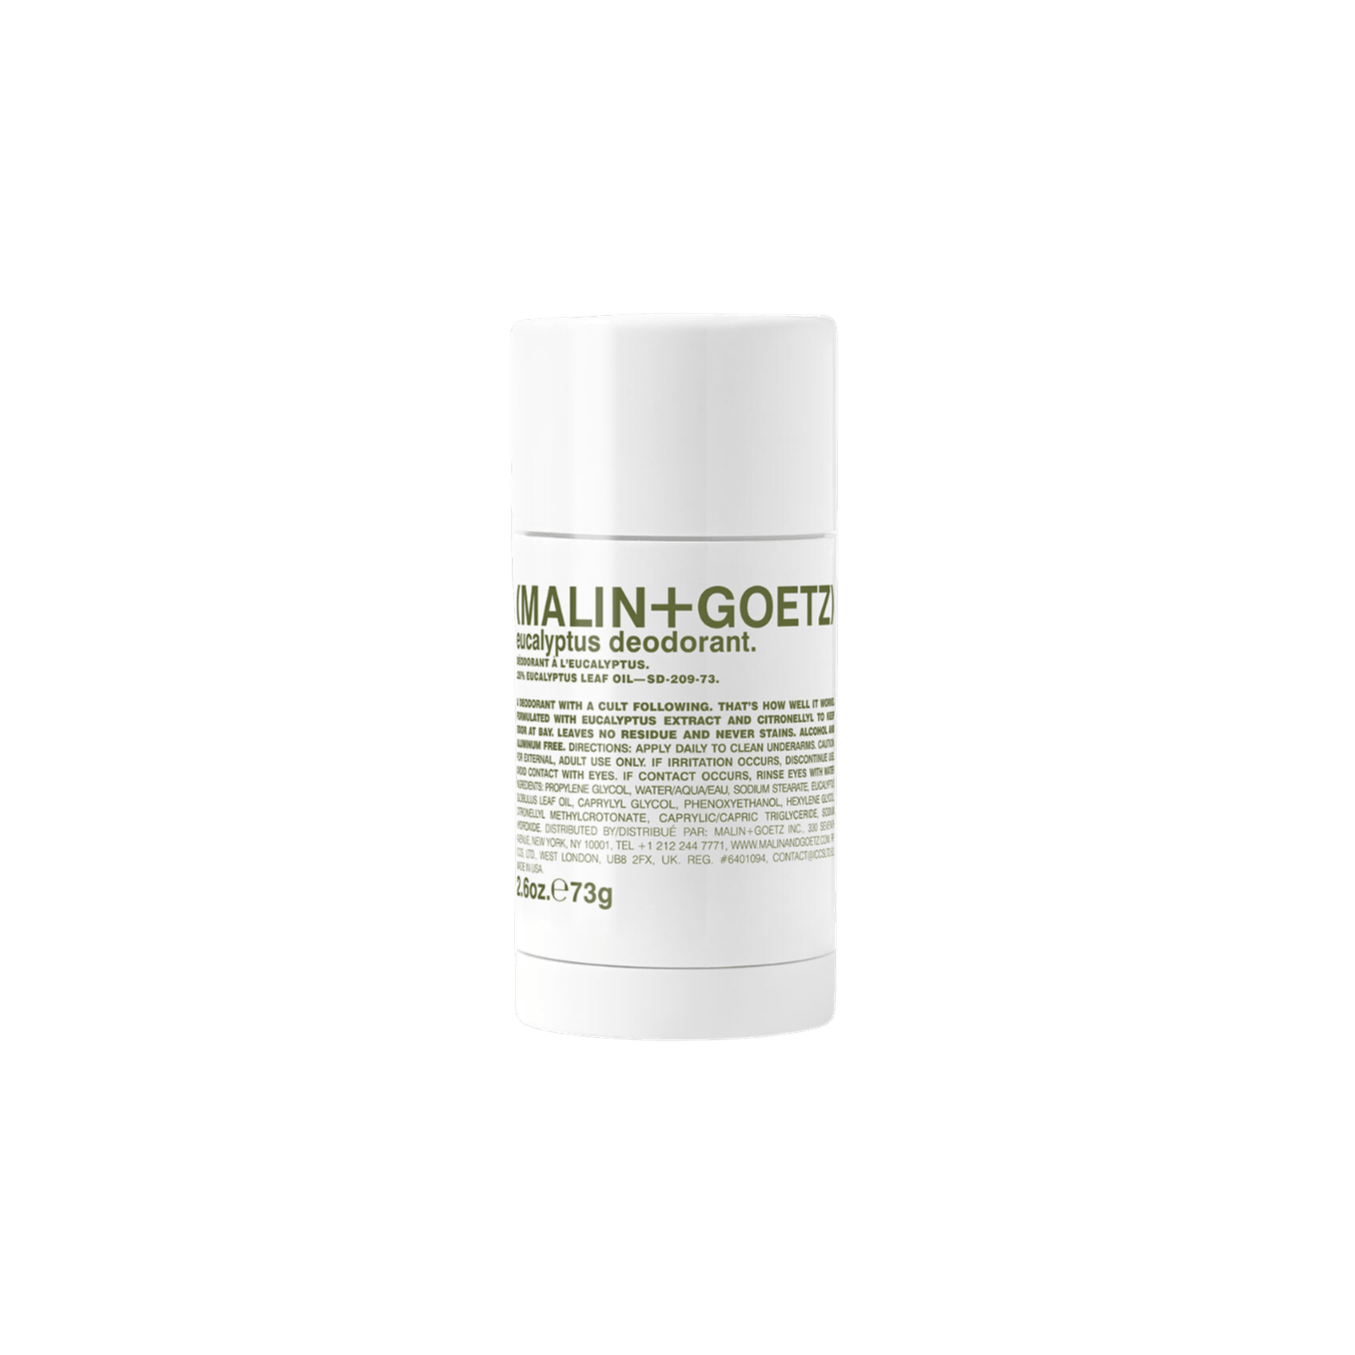 Malin + Goetz - eucalyptus deodorant | Perfume Lounge